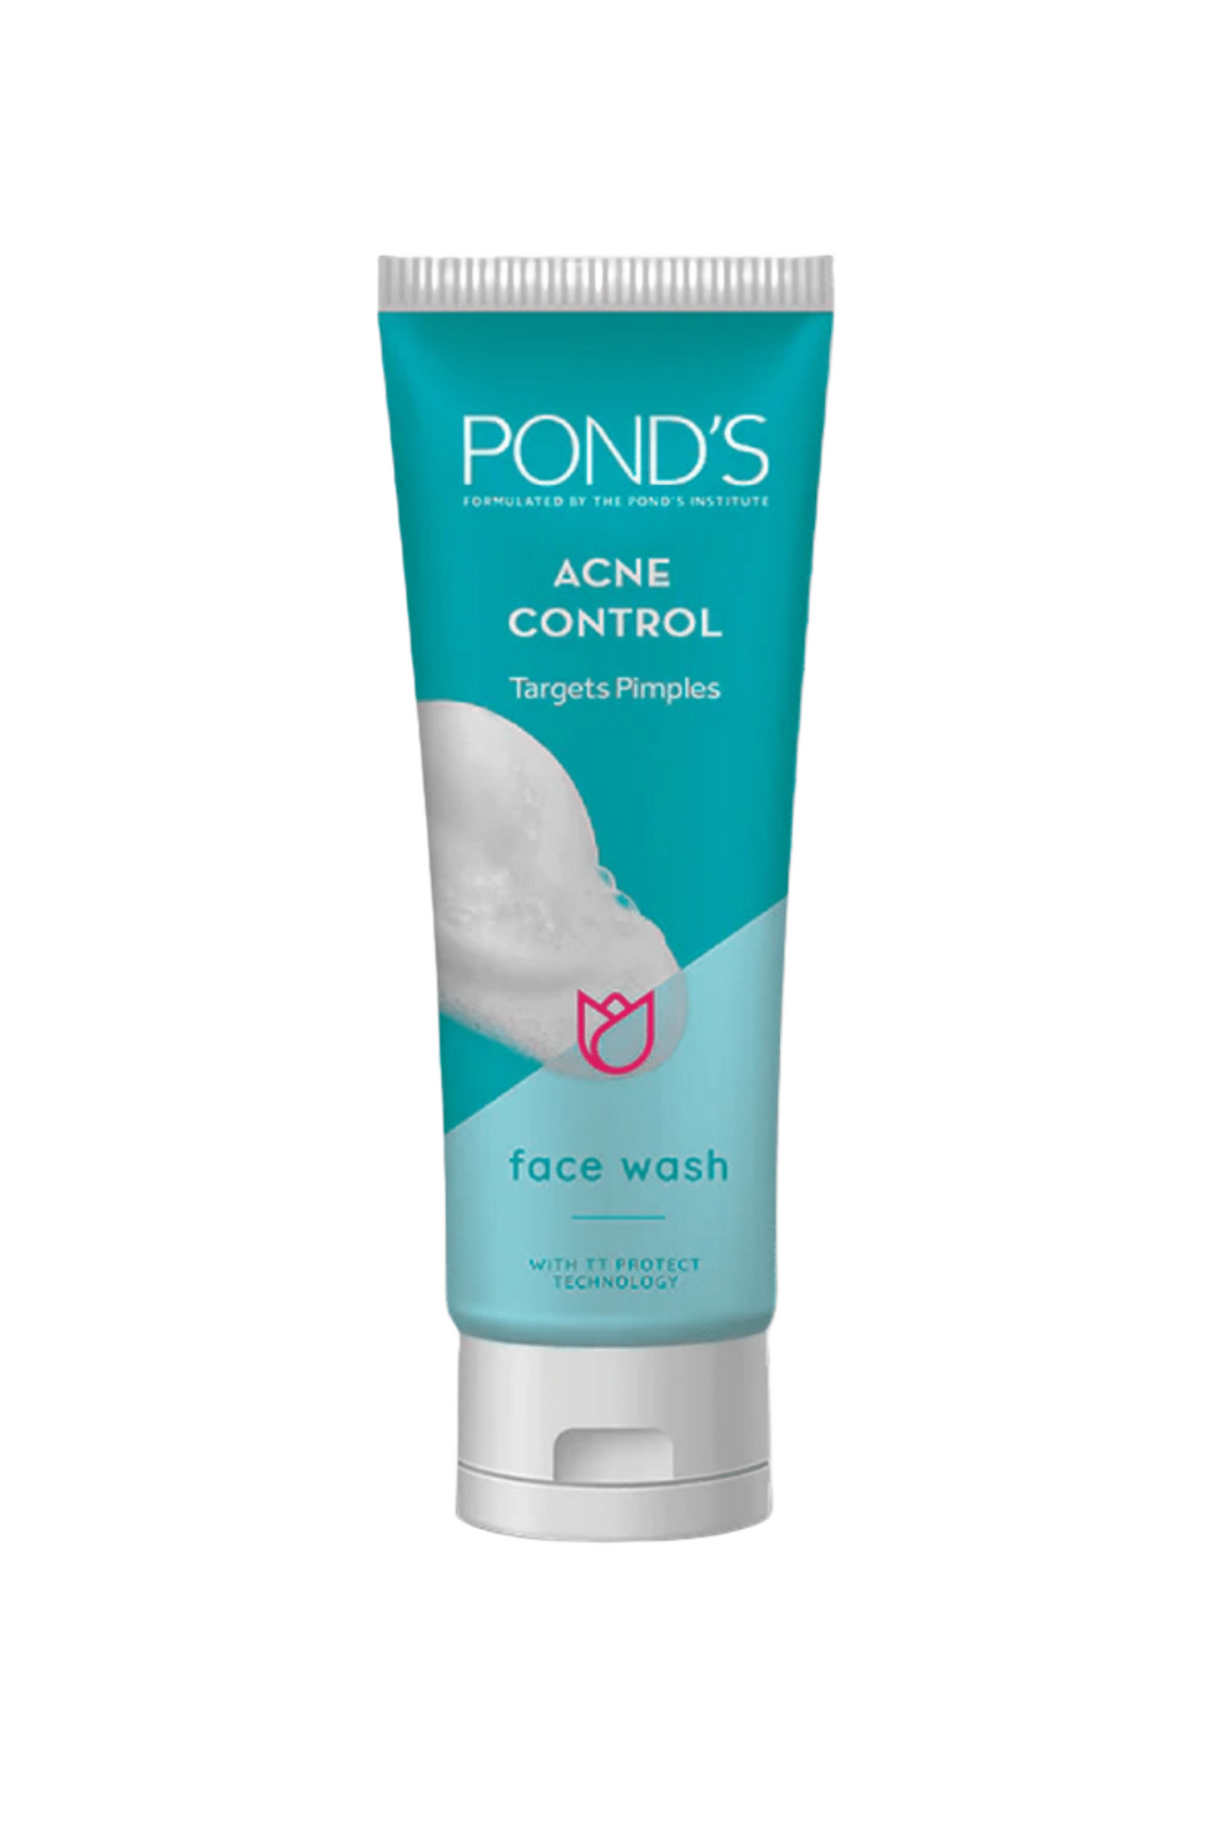 ponds face wash acne control 100g